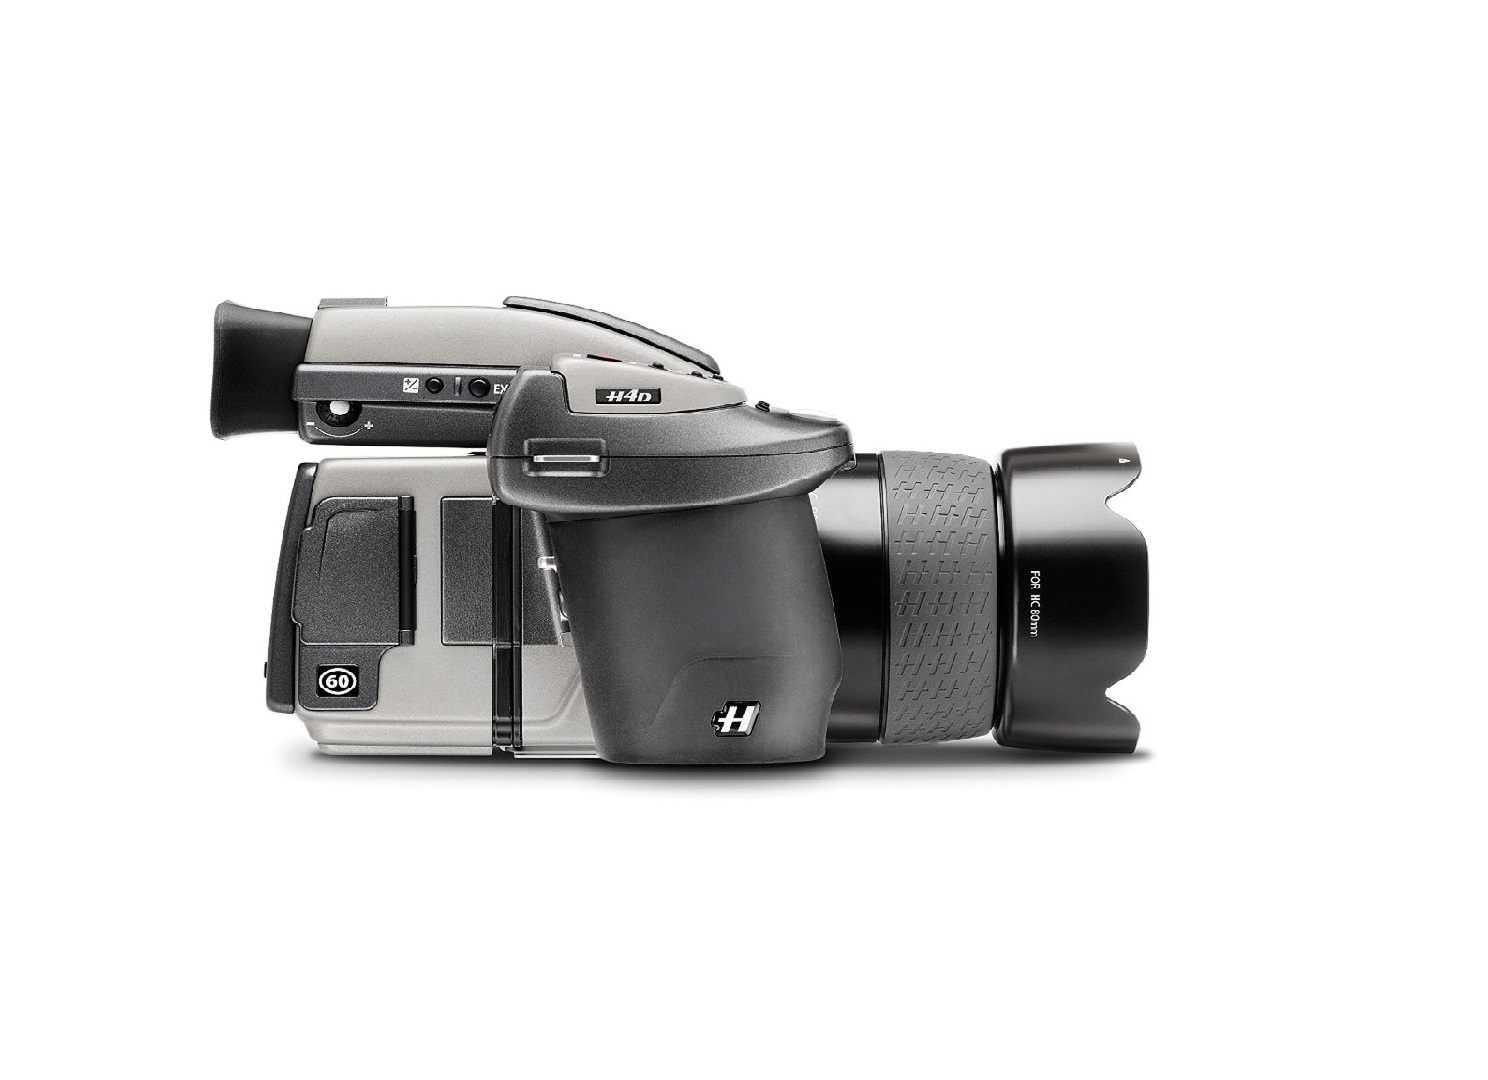 Fifty In quantity Gaseous Hasselblad H4D-60 – cel mai scump aparat foto din lume! – LoudCars